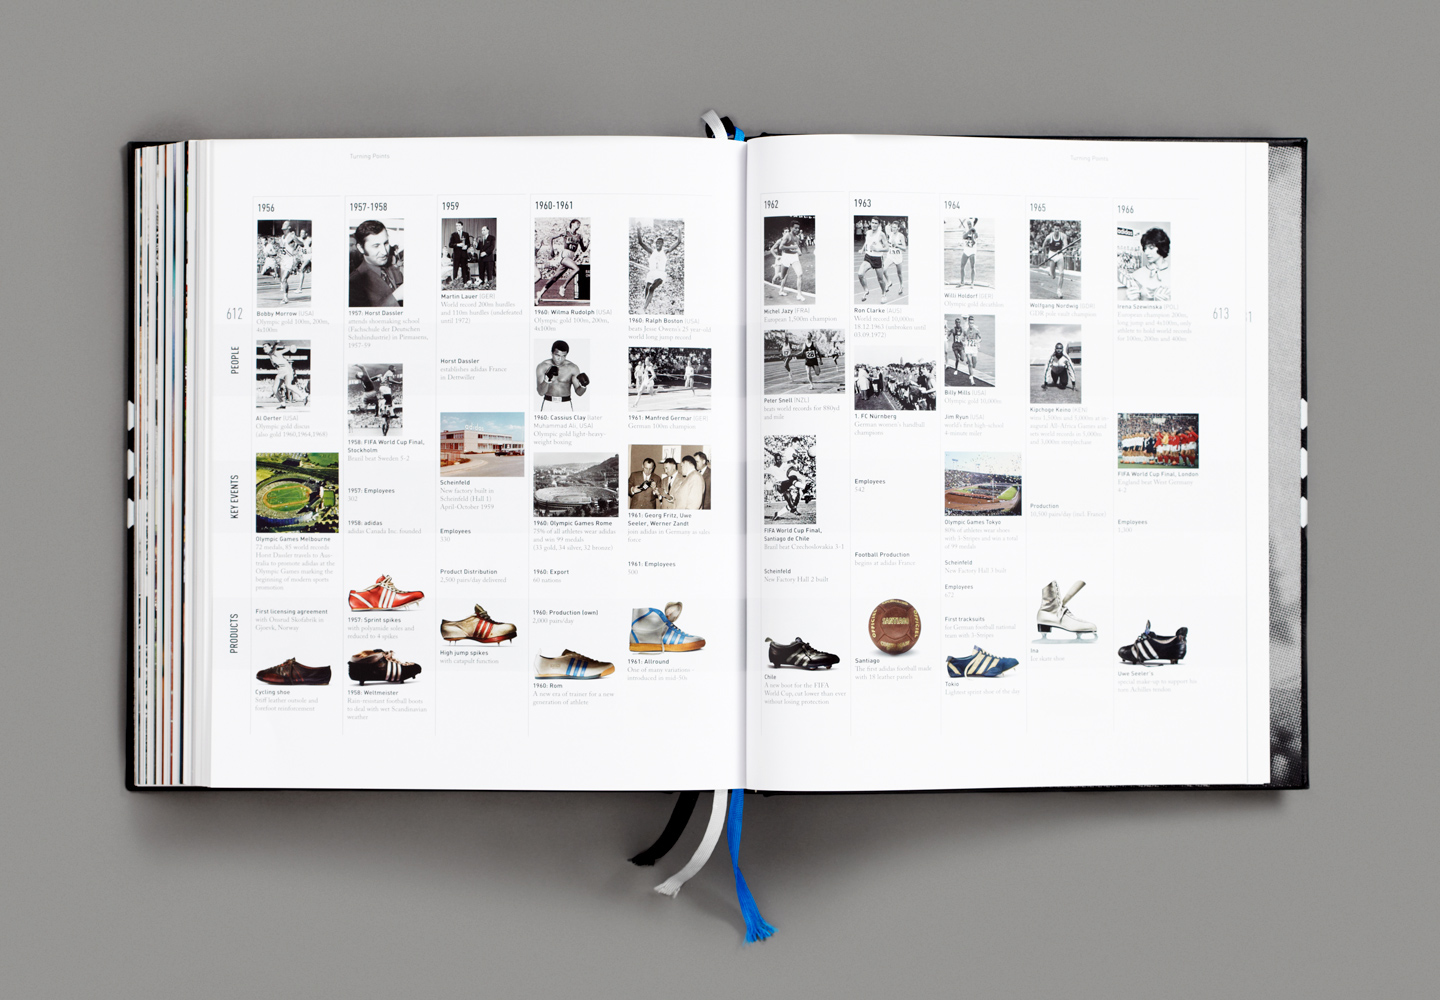 adidas - History book | Behance